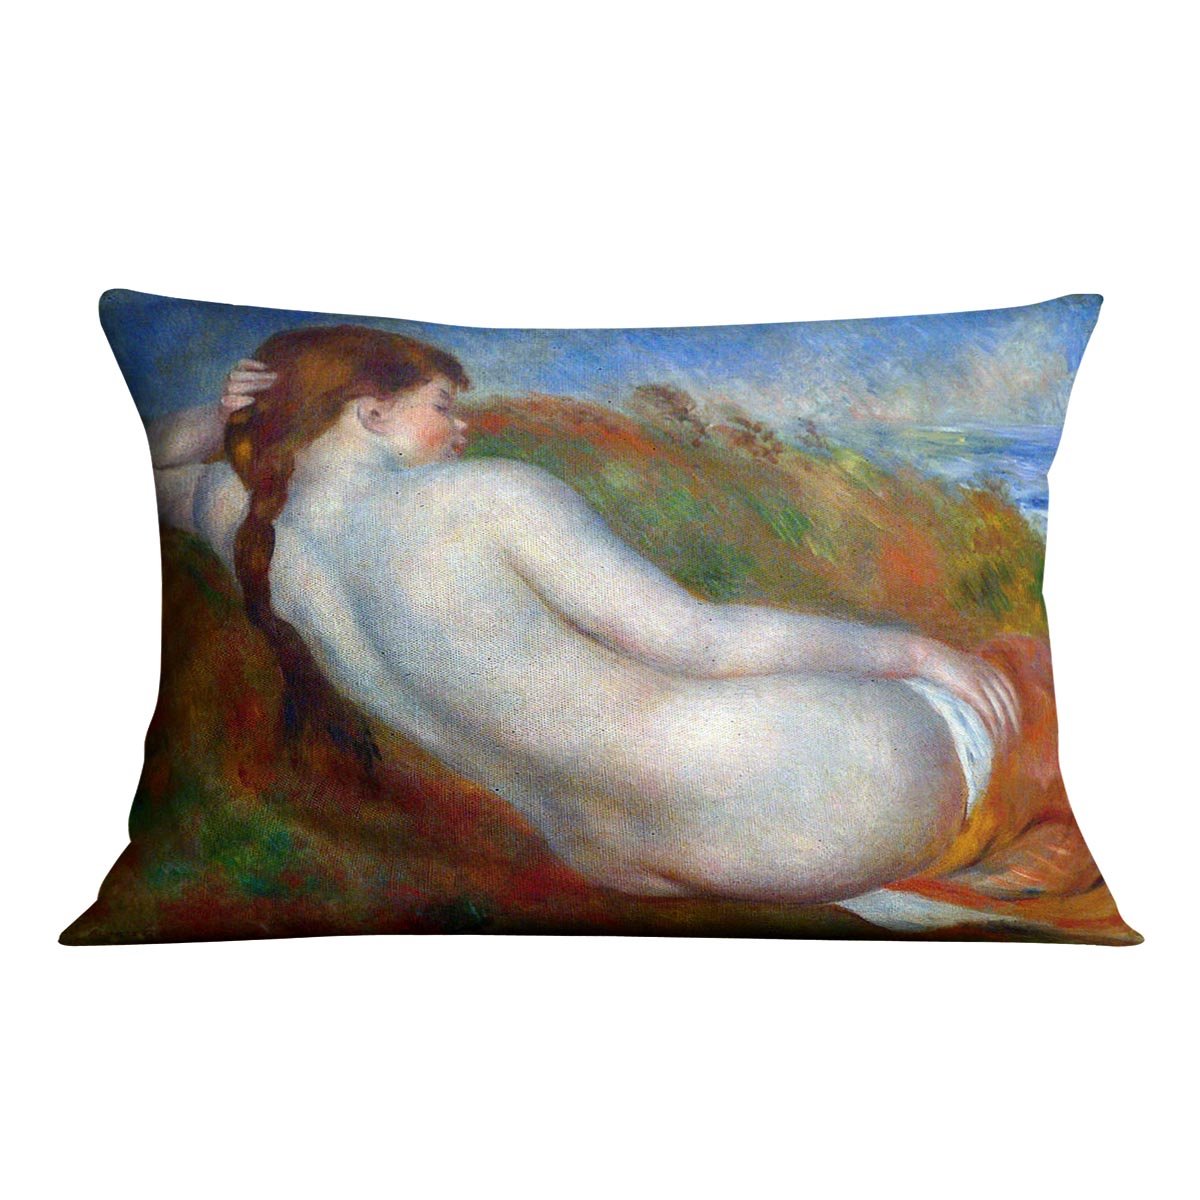 Reclining nude by Renoir Throw Pillow